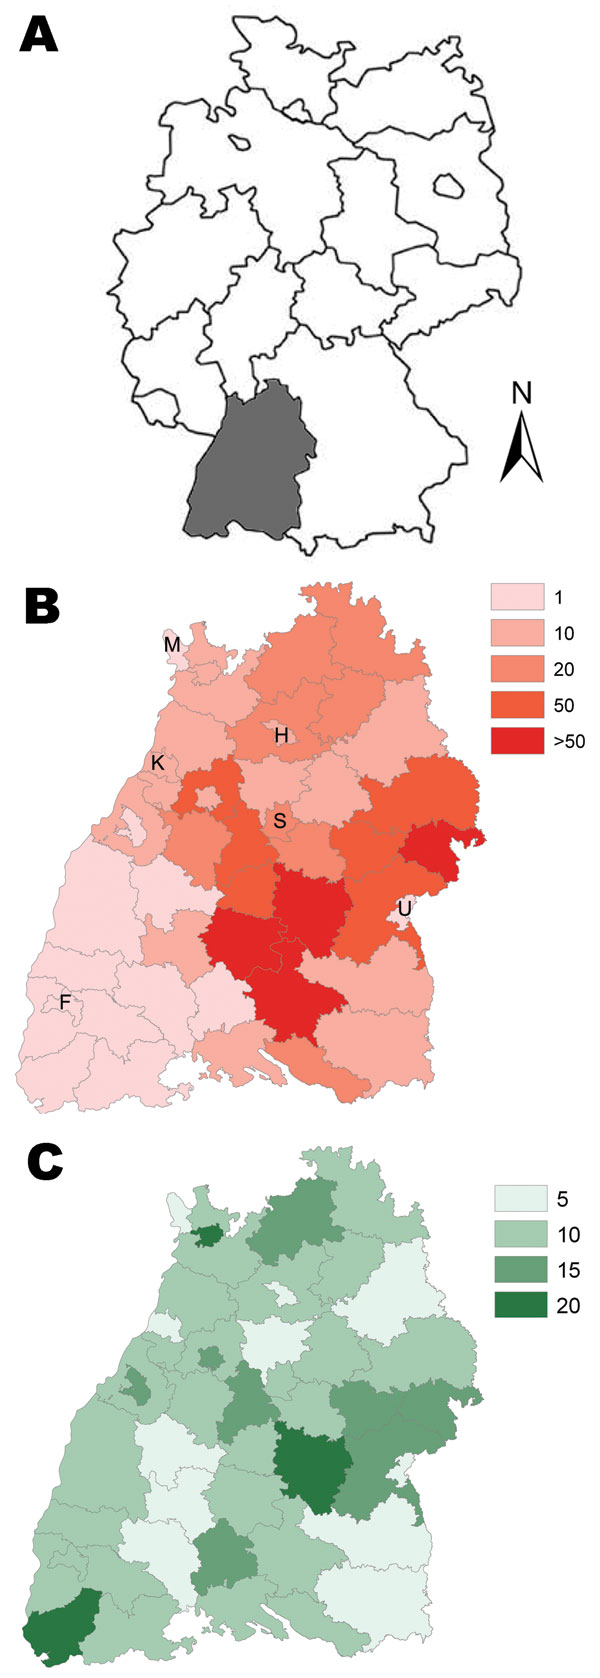 A) Map of Germany showing location of Baden-Württemberg region (gray shading). B) Cumulative incidence (per 100,000 population) of nephropathia epidemica, Baden-Württemberg, Germany, 2001–2007. Letters indicate major cities: F, Freiburg; H, Heilbronn; K, Karlsruhe; M, Mannheim; S, Stuttgart; U, Ulm. C) Percentage cover of beech forest.